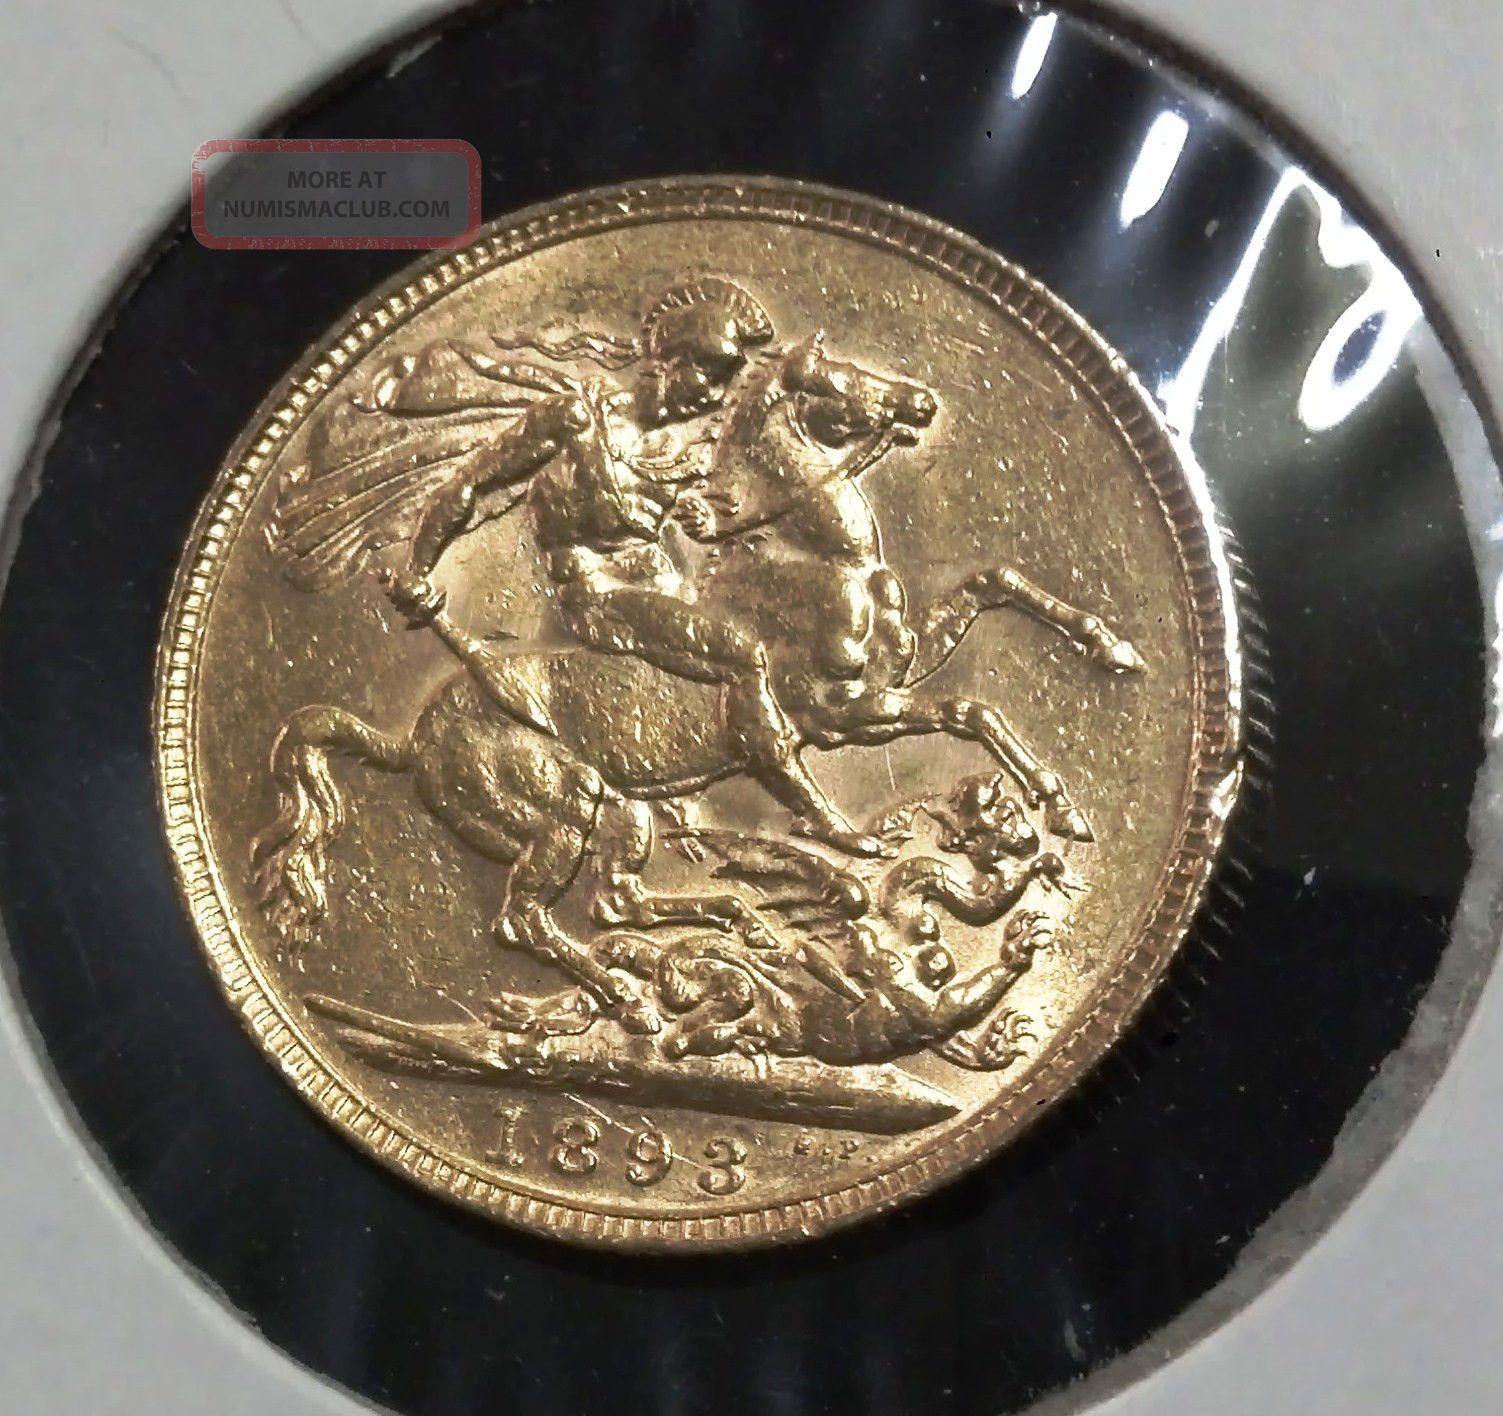 Authentic 1893 Queen Victoria British Gold Sovereign Coin Gem Bu Coin